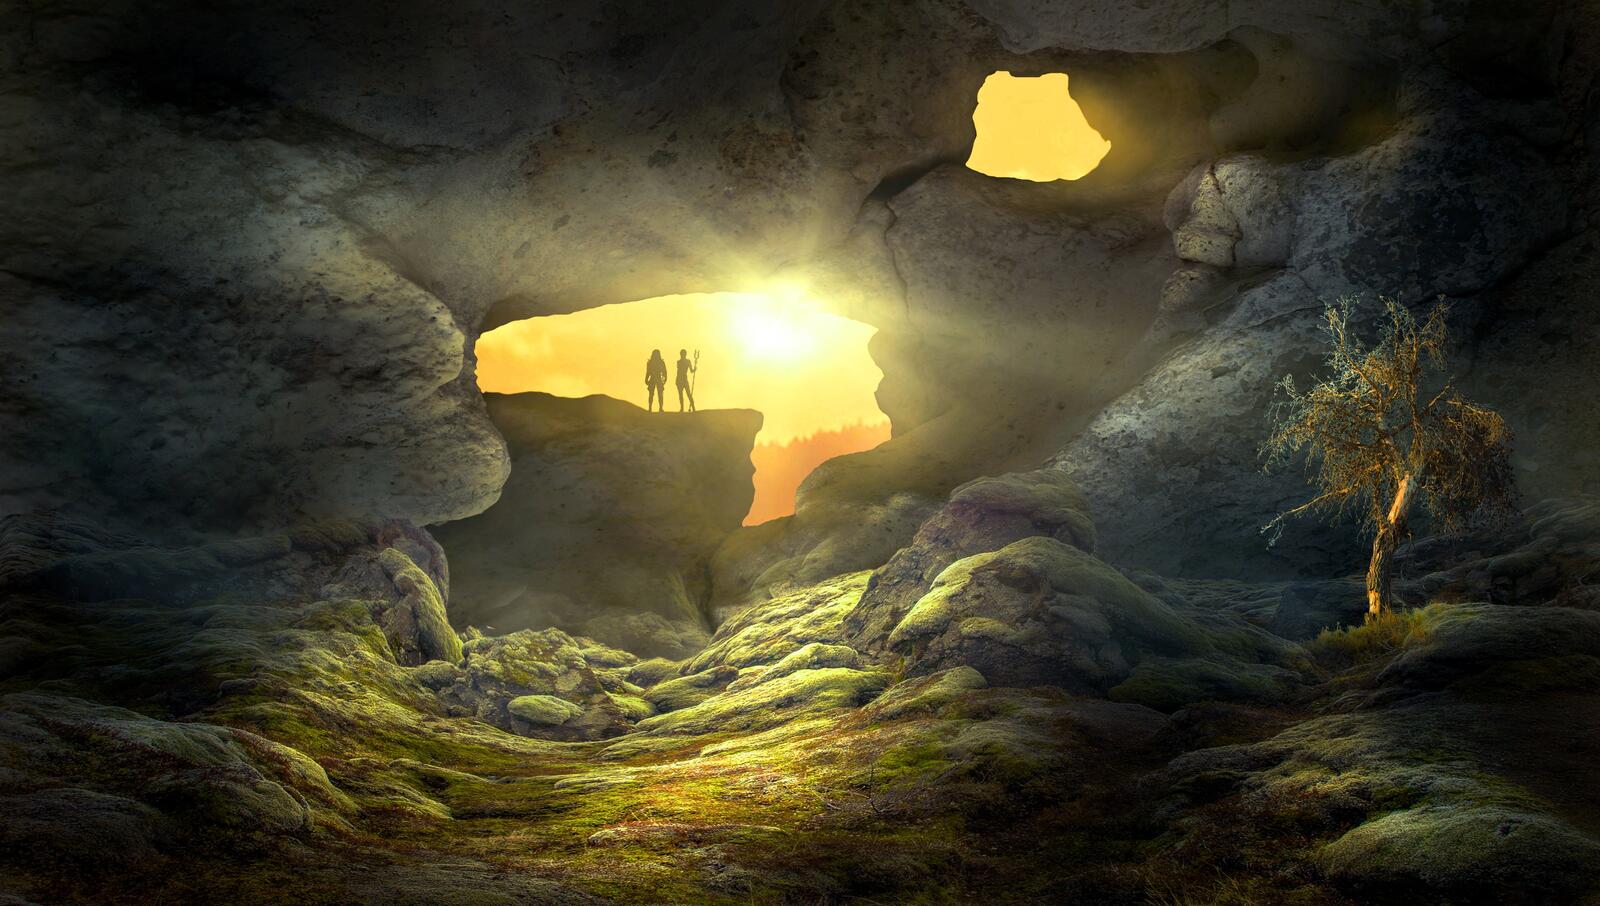 Бесплатное фото Пещера с закат солнца